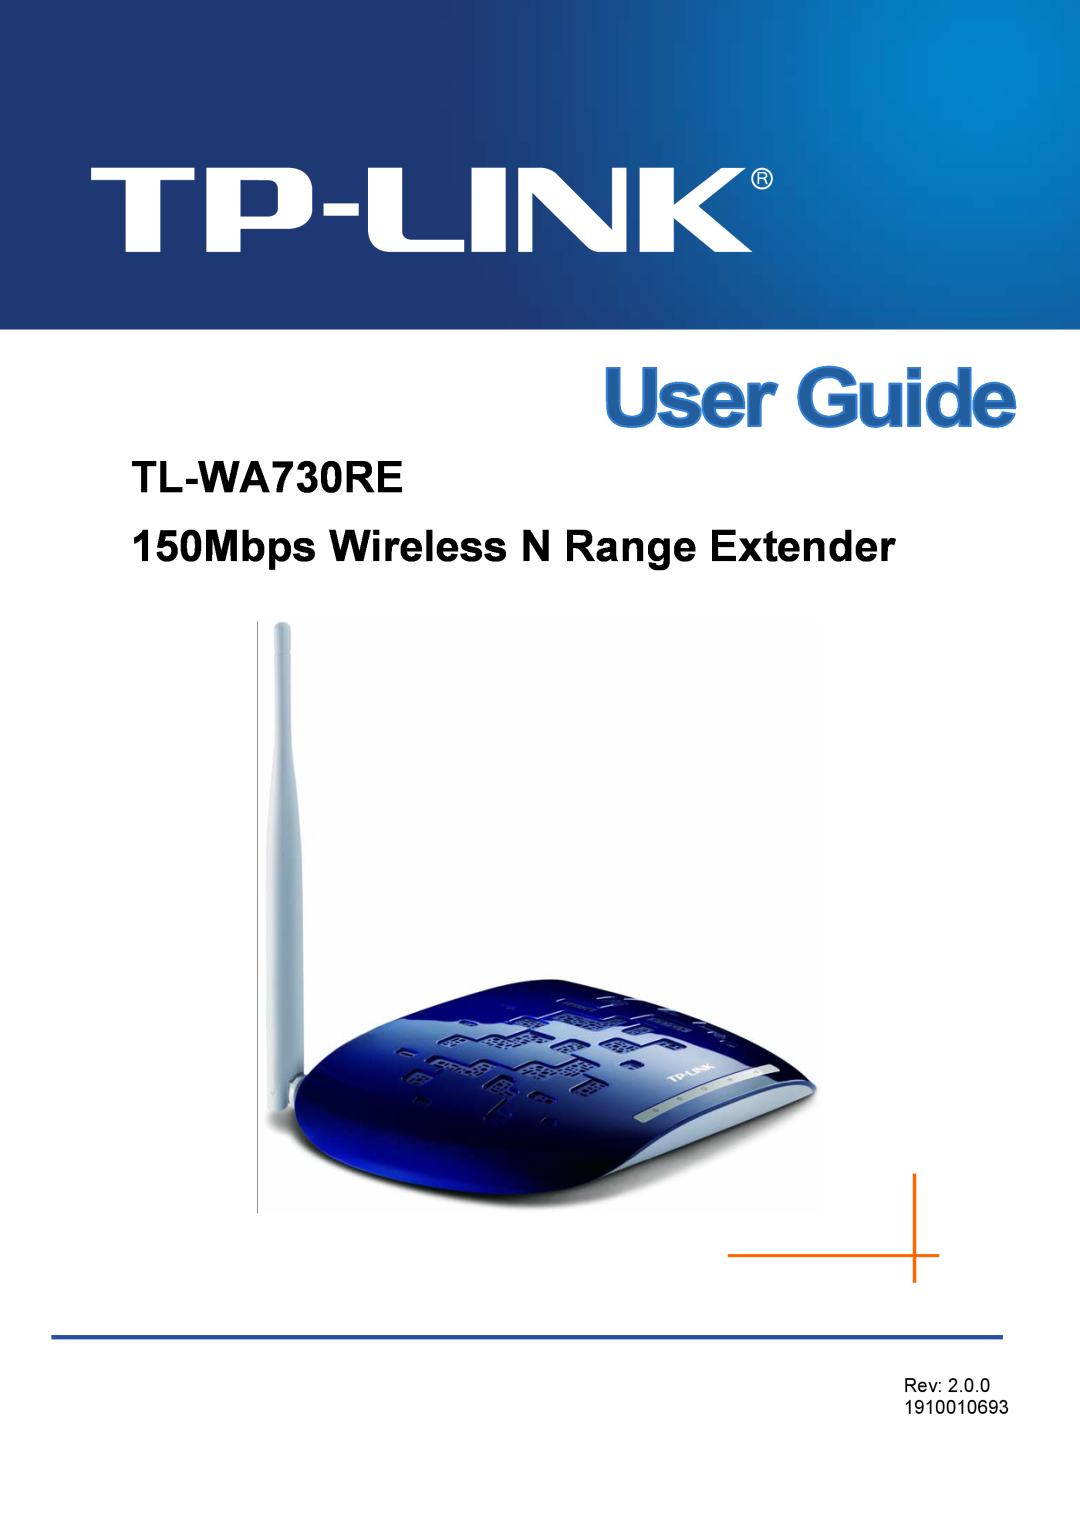 TP-Link manual TL-WA730RE 150Mbps Wireless Range Extender, Rev 1.0.0 